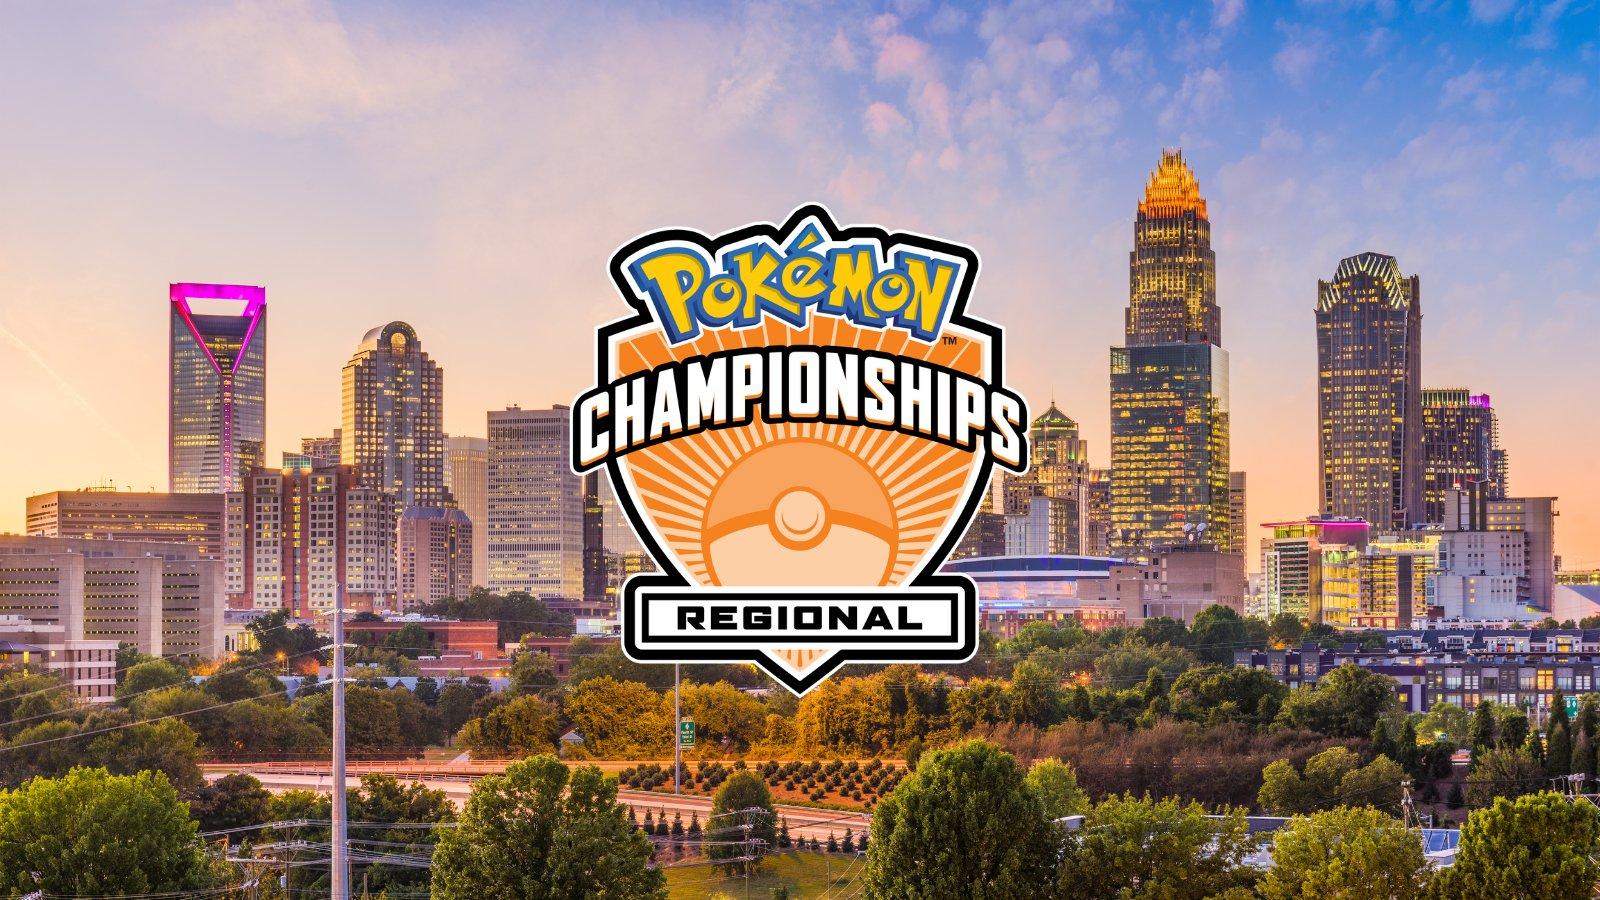 Play! Pokemon official Charlotte Regional photo